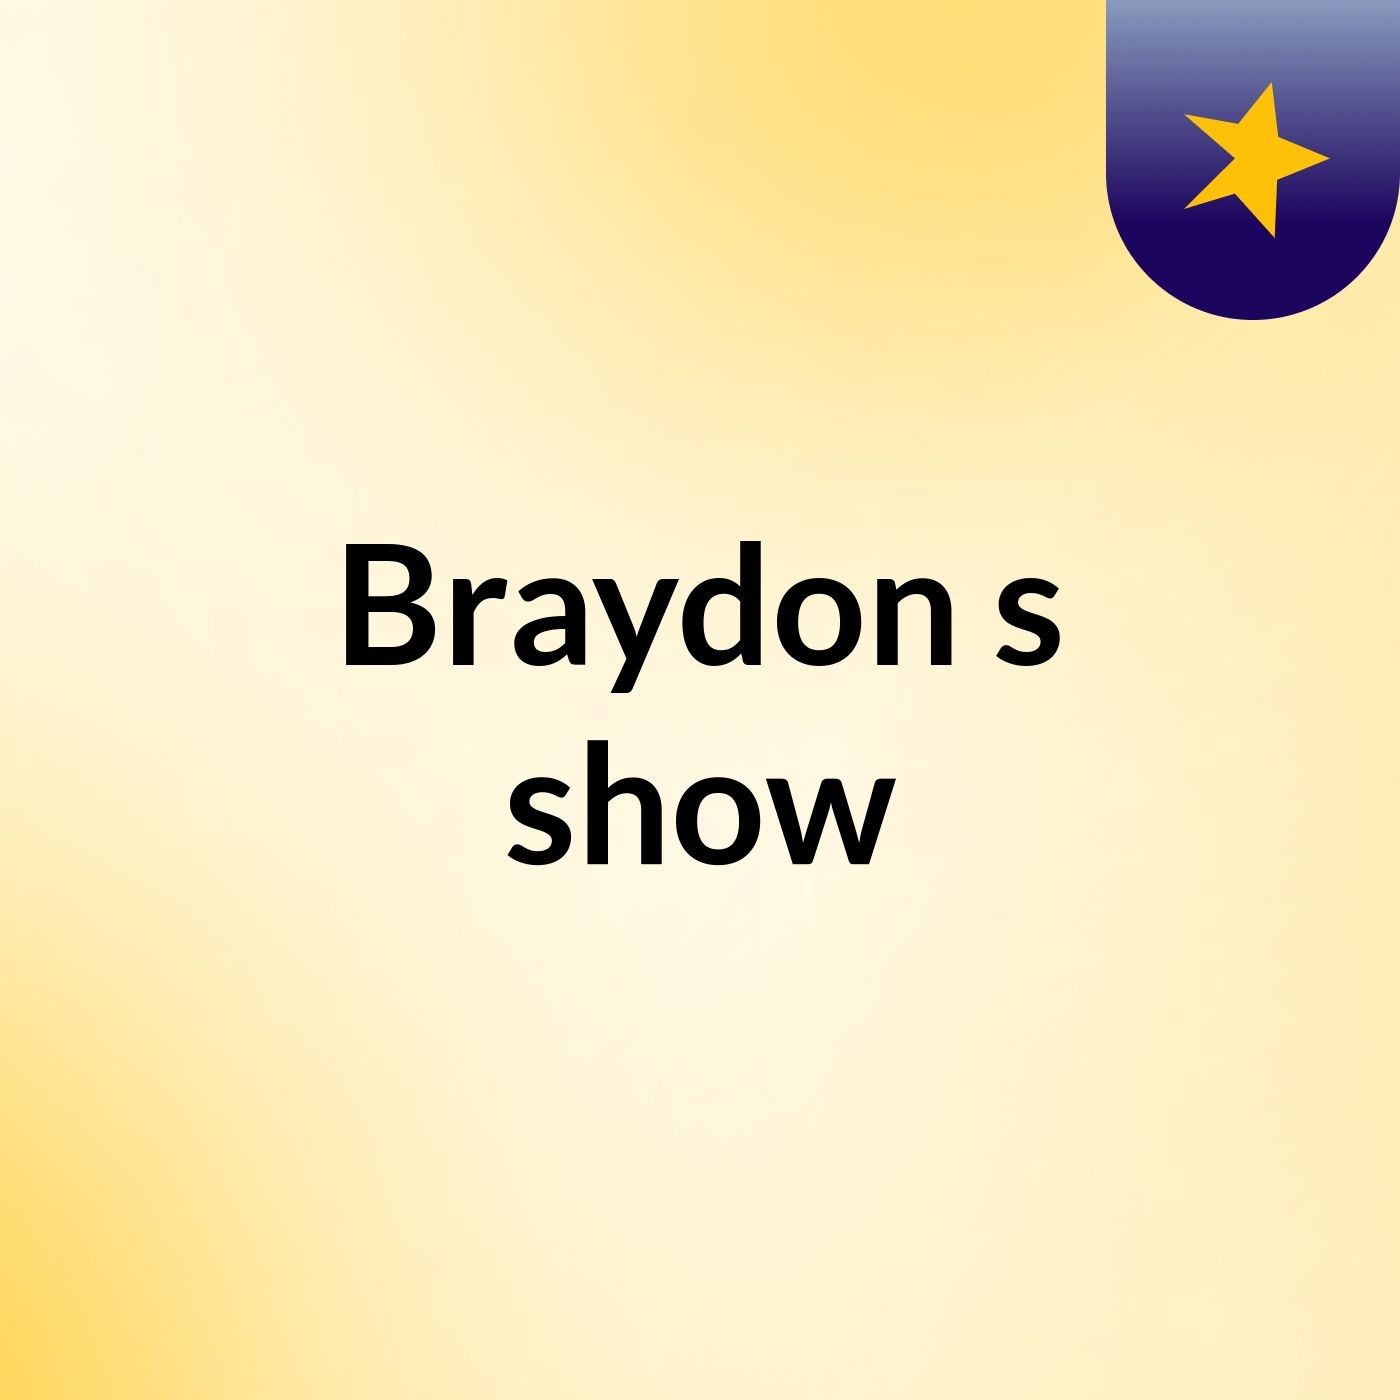 Braydon's show